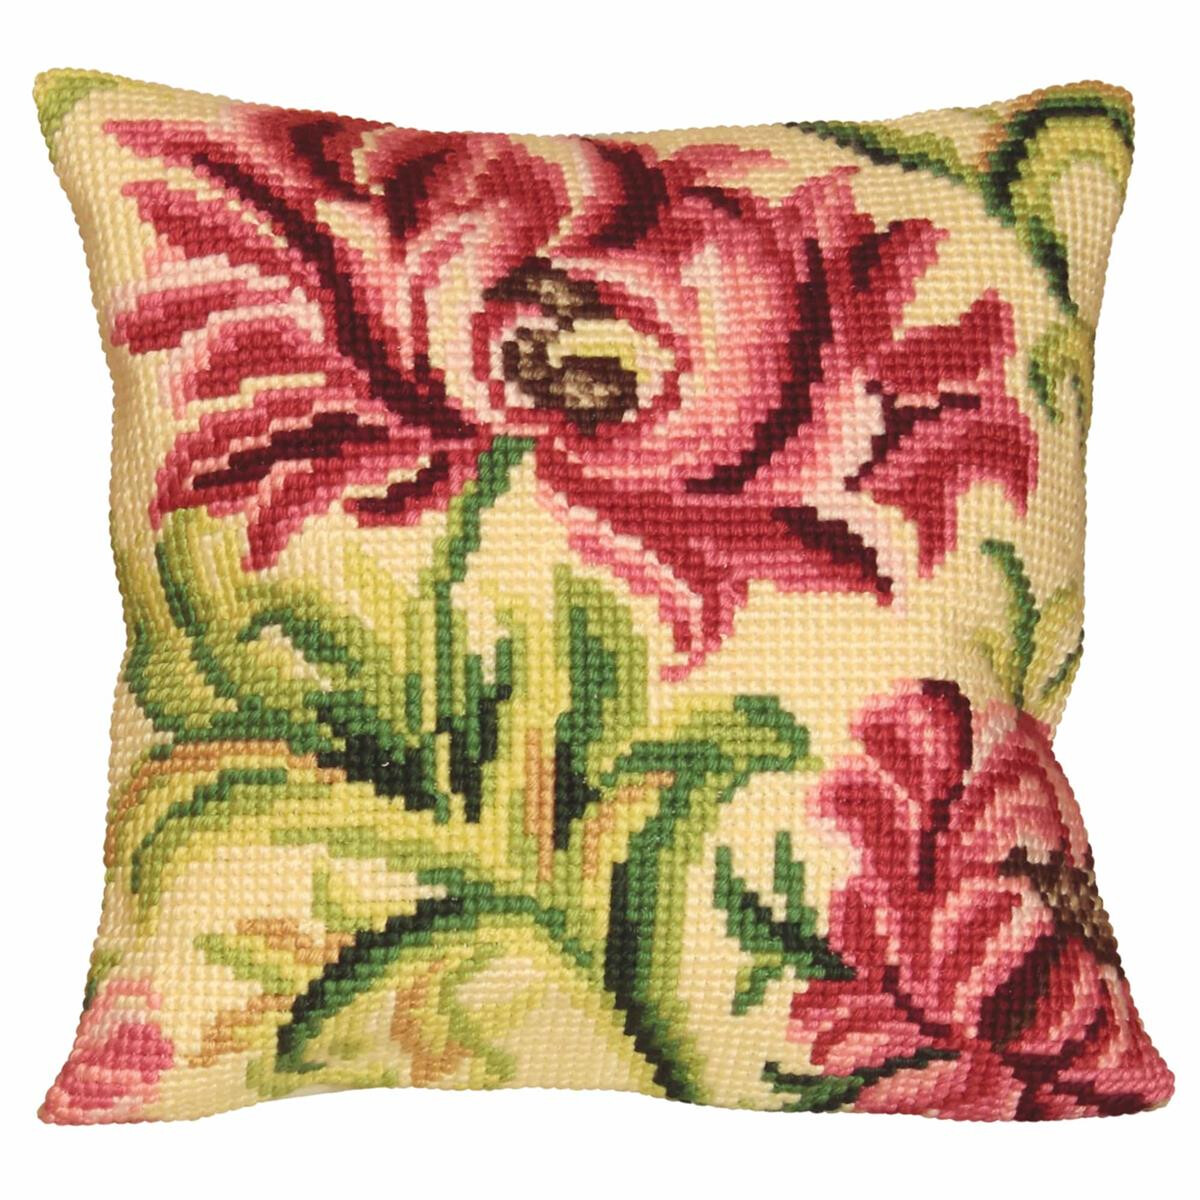 CdA stamped cross stitch kit cushion "Wild Rose in...